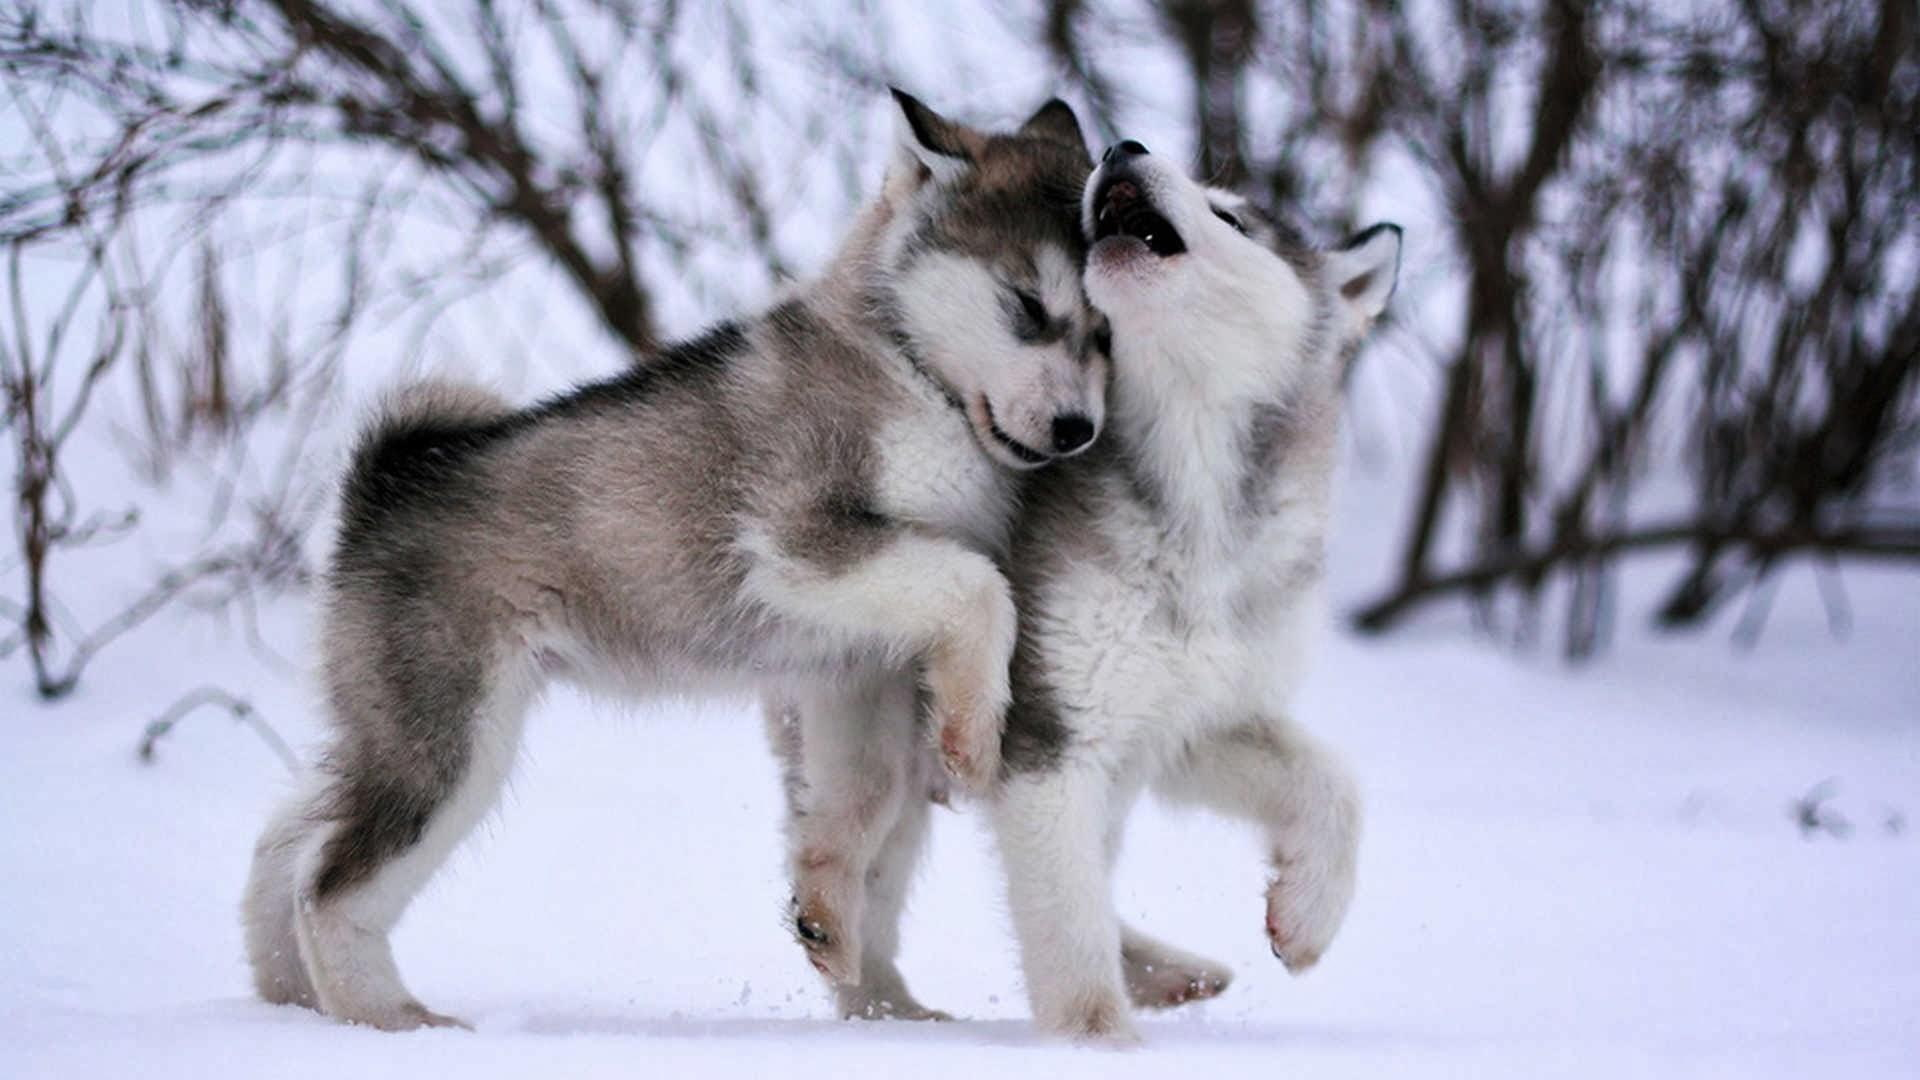 Dog wallpaper, eskimo dog, malamute, sled dog, husky, baby, cute, animals